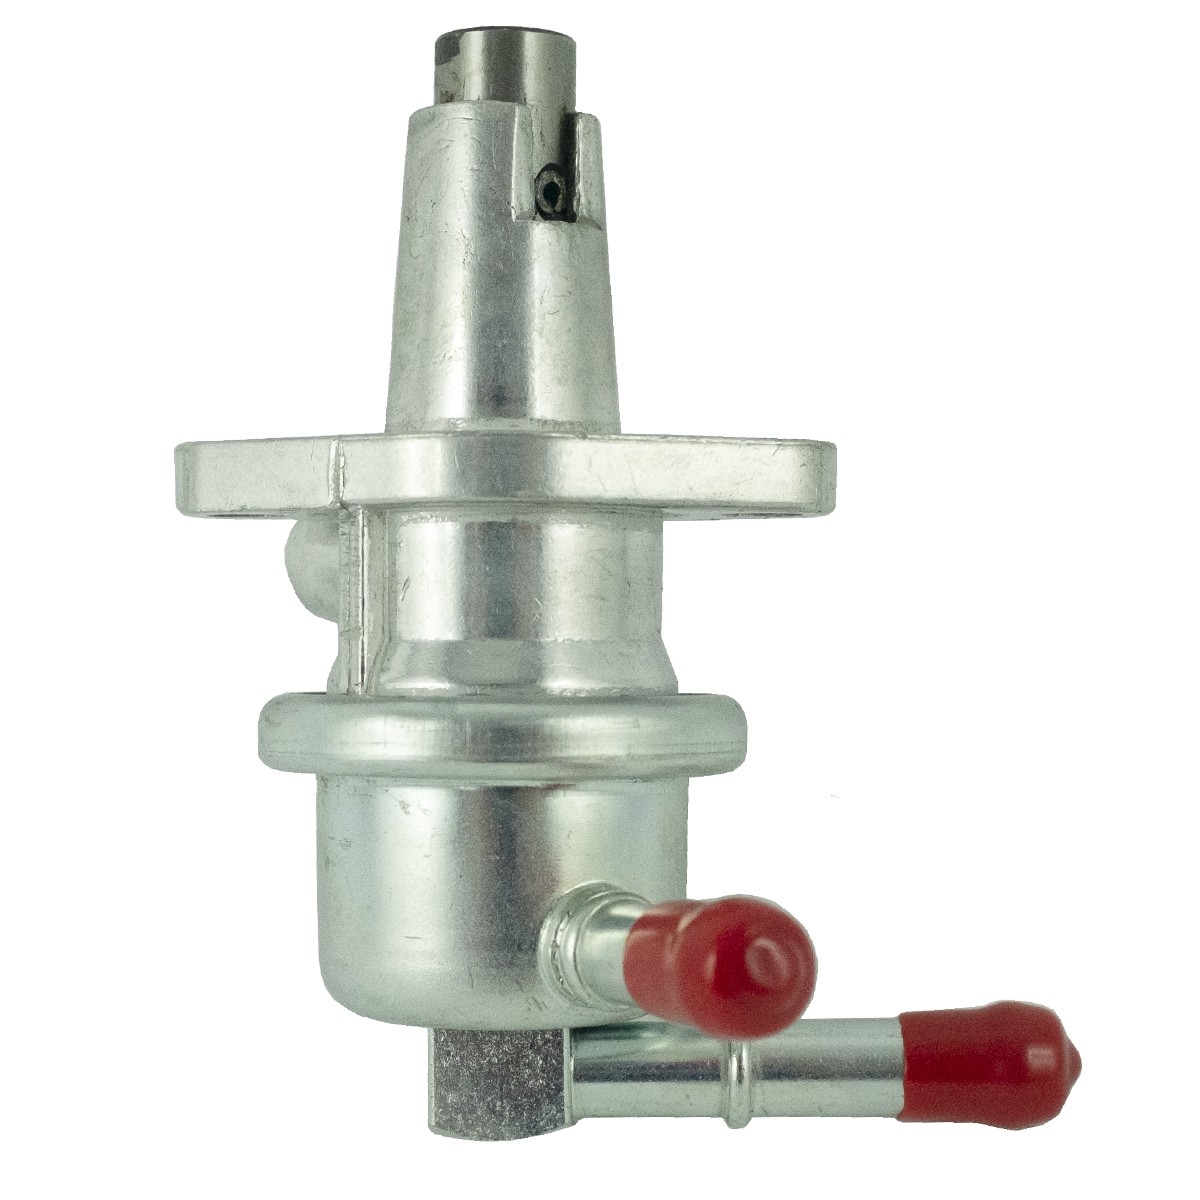 Fuel pump Kubota L3408 / 92.50 mm / 6-15-110-01 / 17121-52030